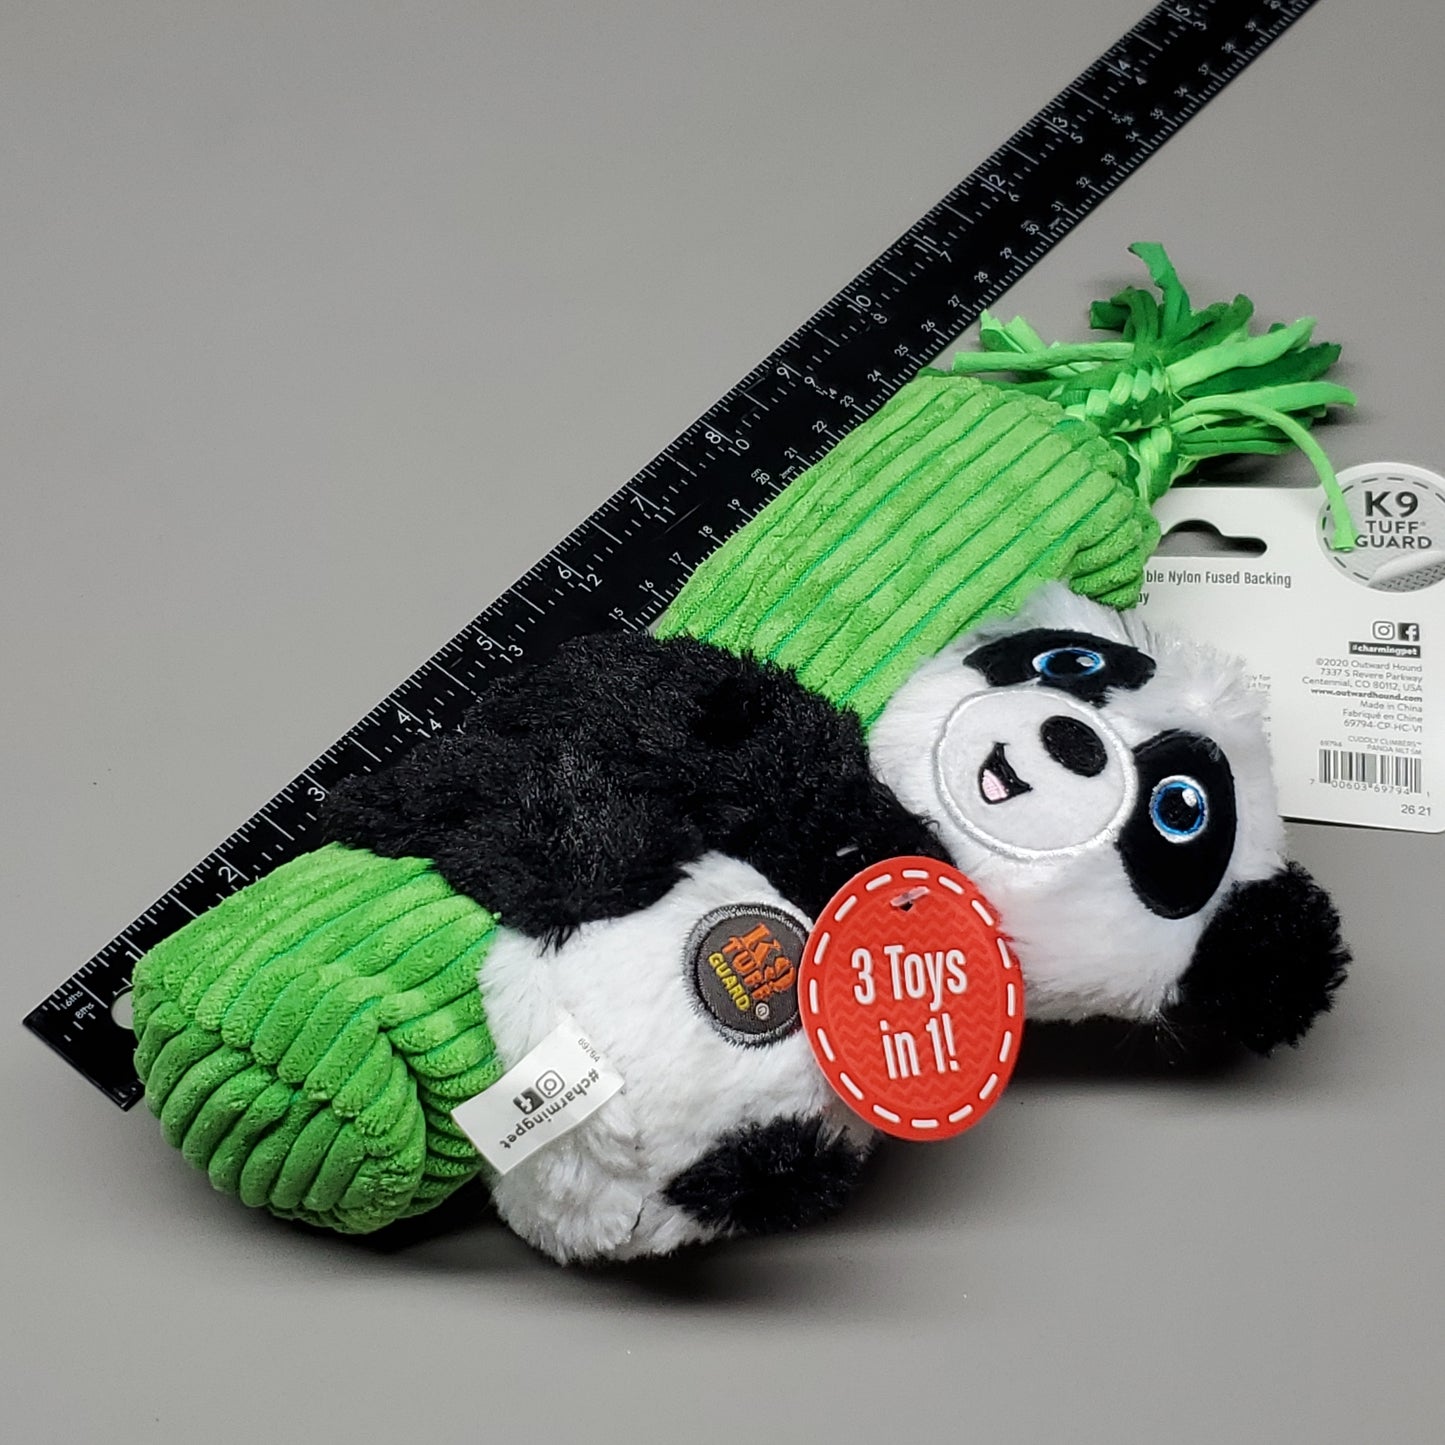 CHARMING PET Cuddly Climbers Panda Plush K9 Tuff Guard Ultra Durable 69794 Black/White (New)